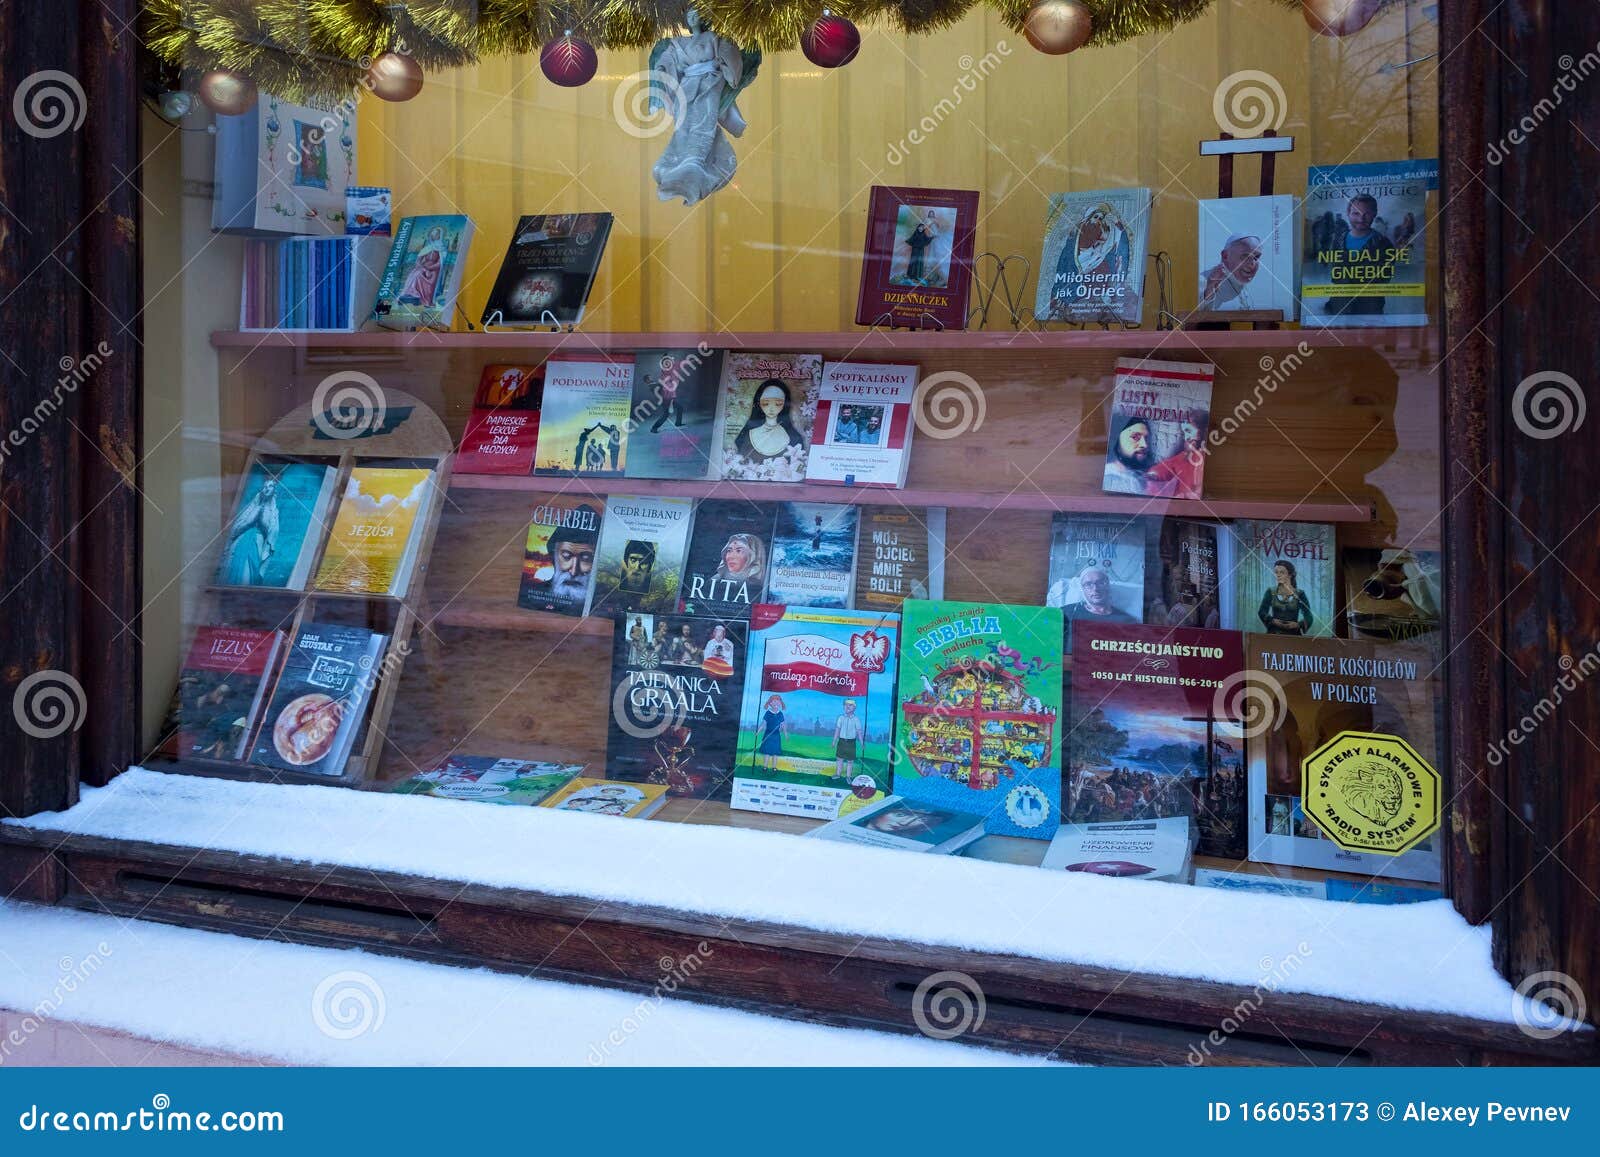 religious book shops